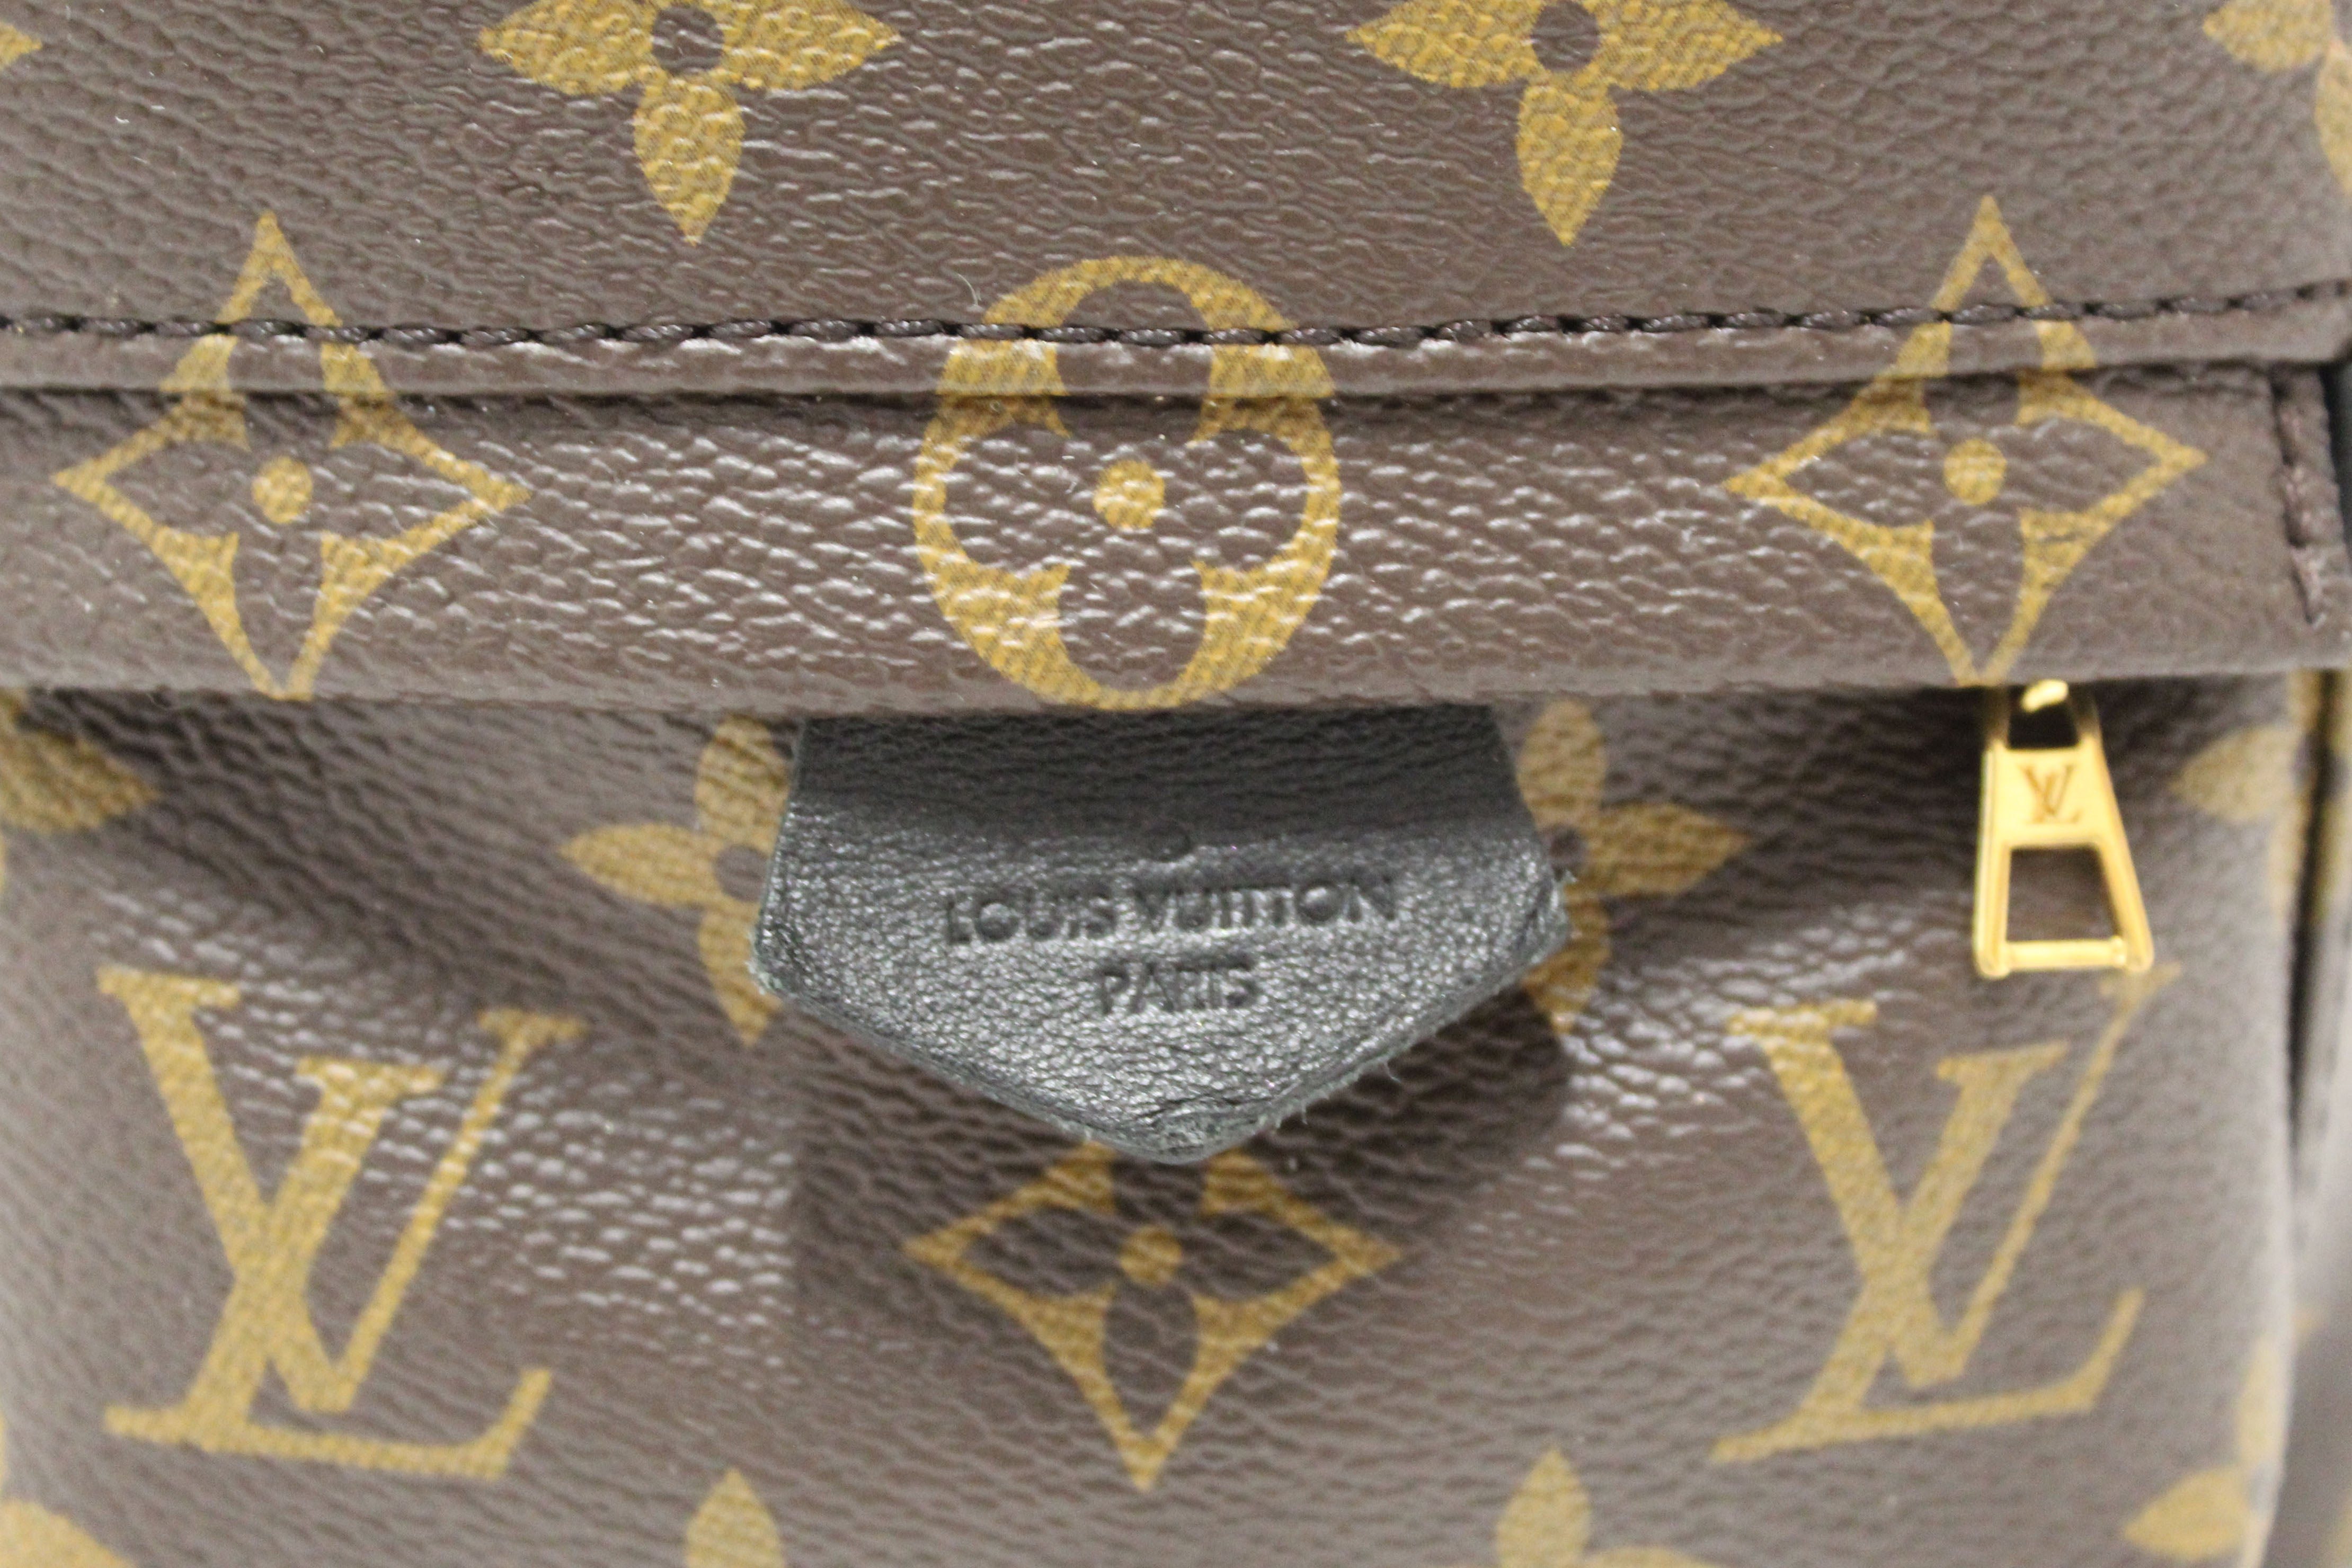 Authentic Louis Vuitton Classic Monogram Palm Springs Mini Backpack